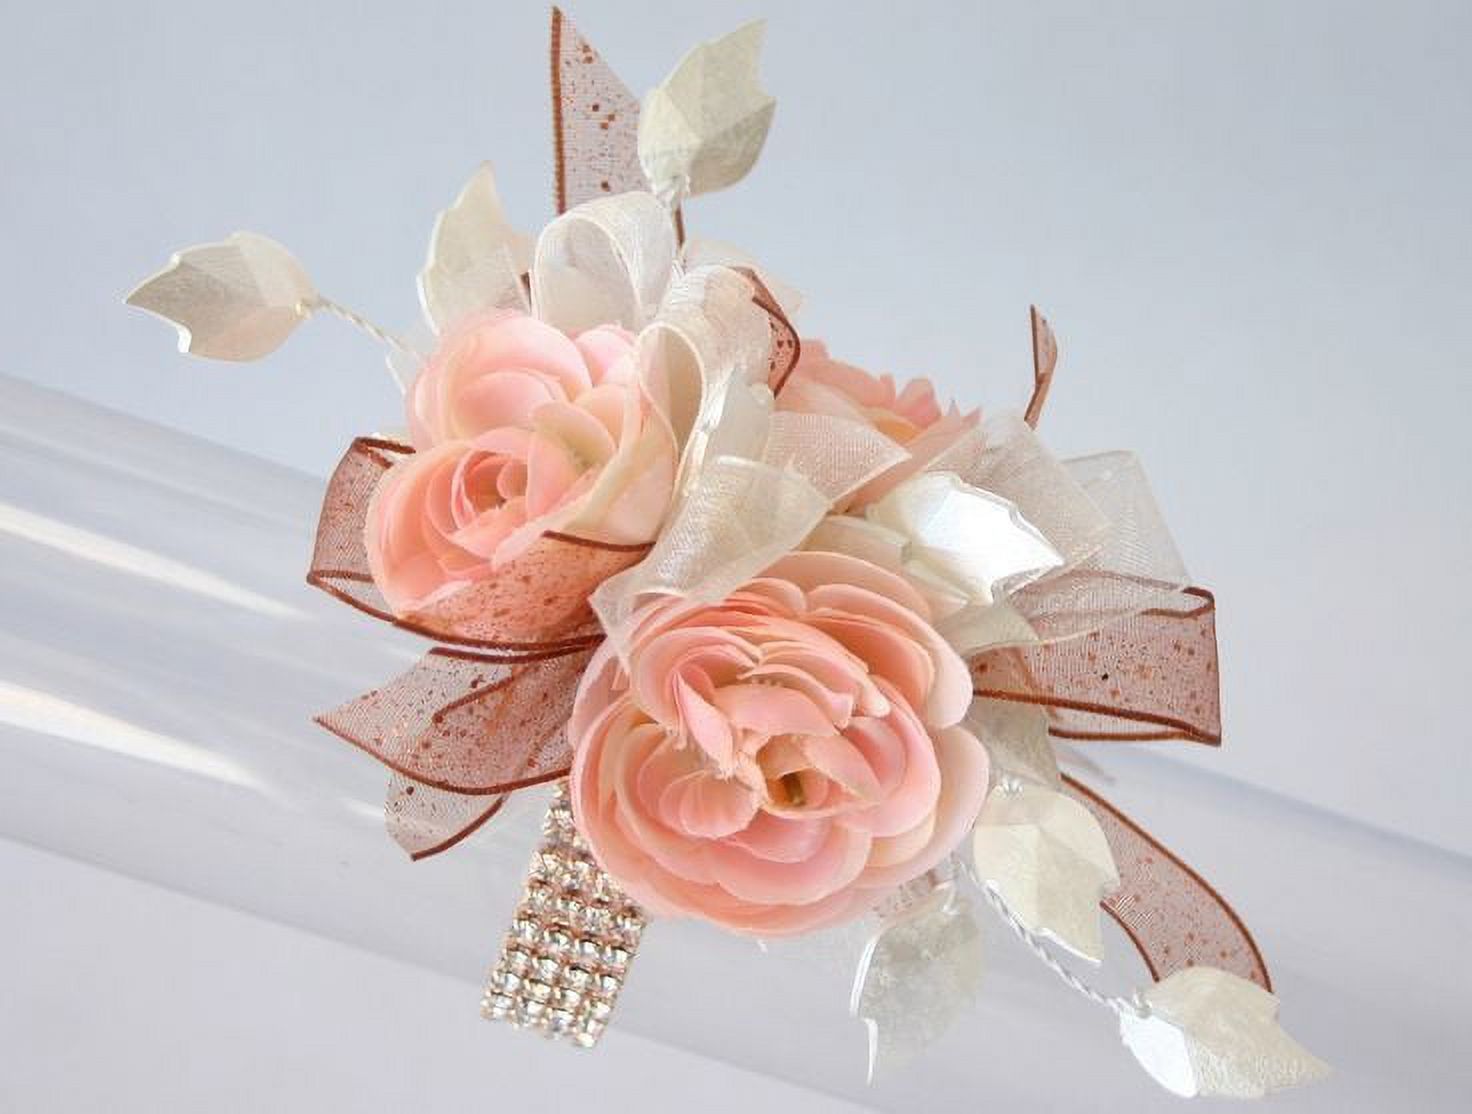 Floral Corsage Bracelet - Rose Gold Rhinestones - Rock Candy Collection 